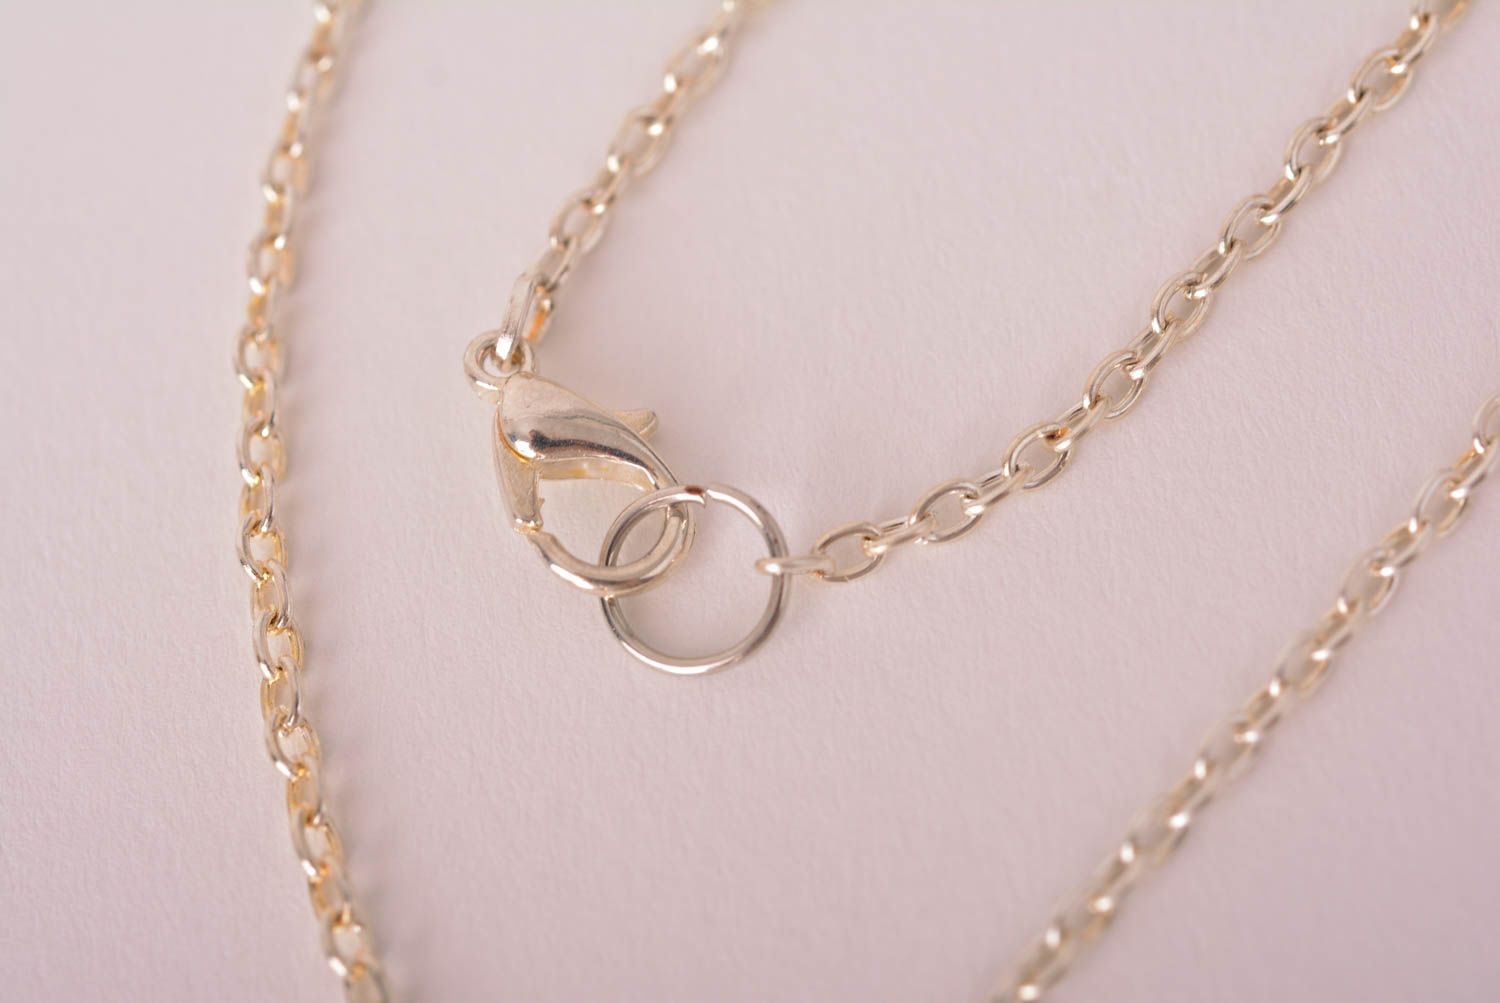 Handmade pendant unusual pendant for women gift ideas designer jewelry photo 5